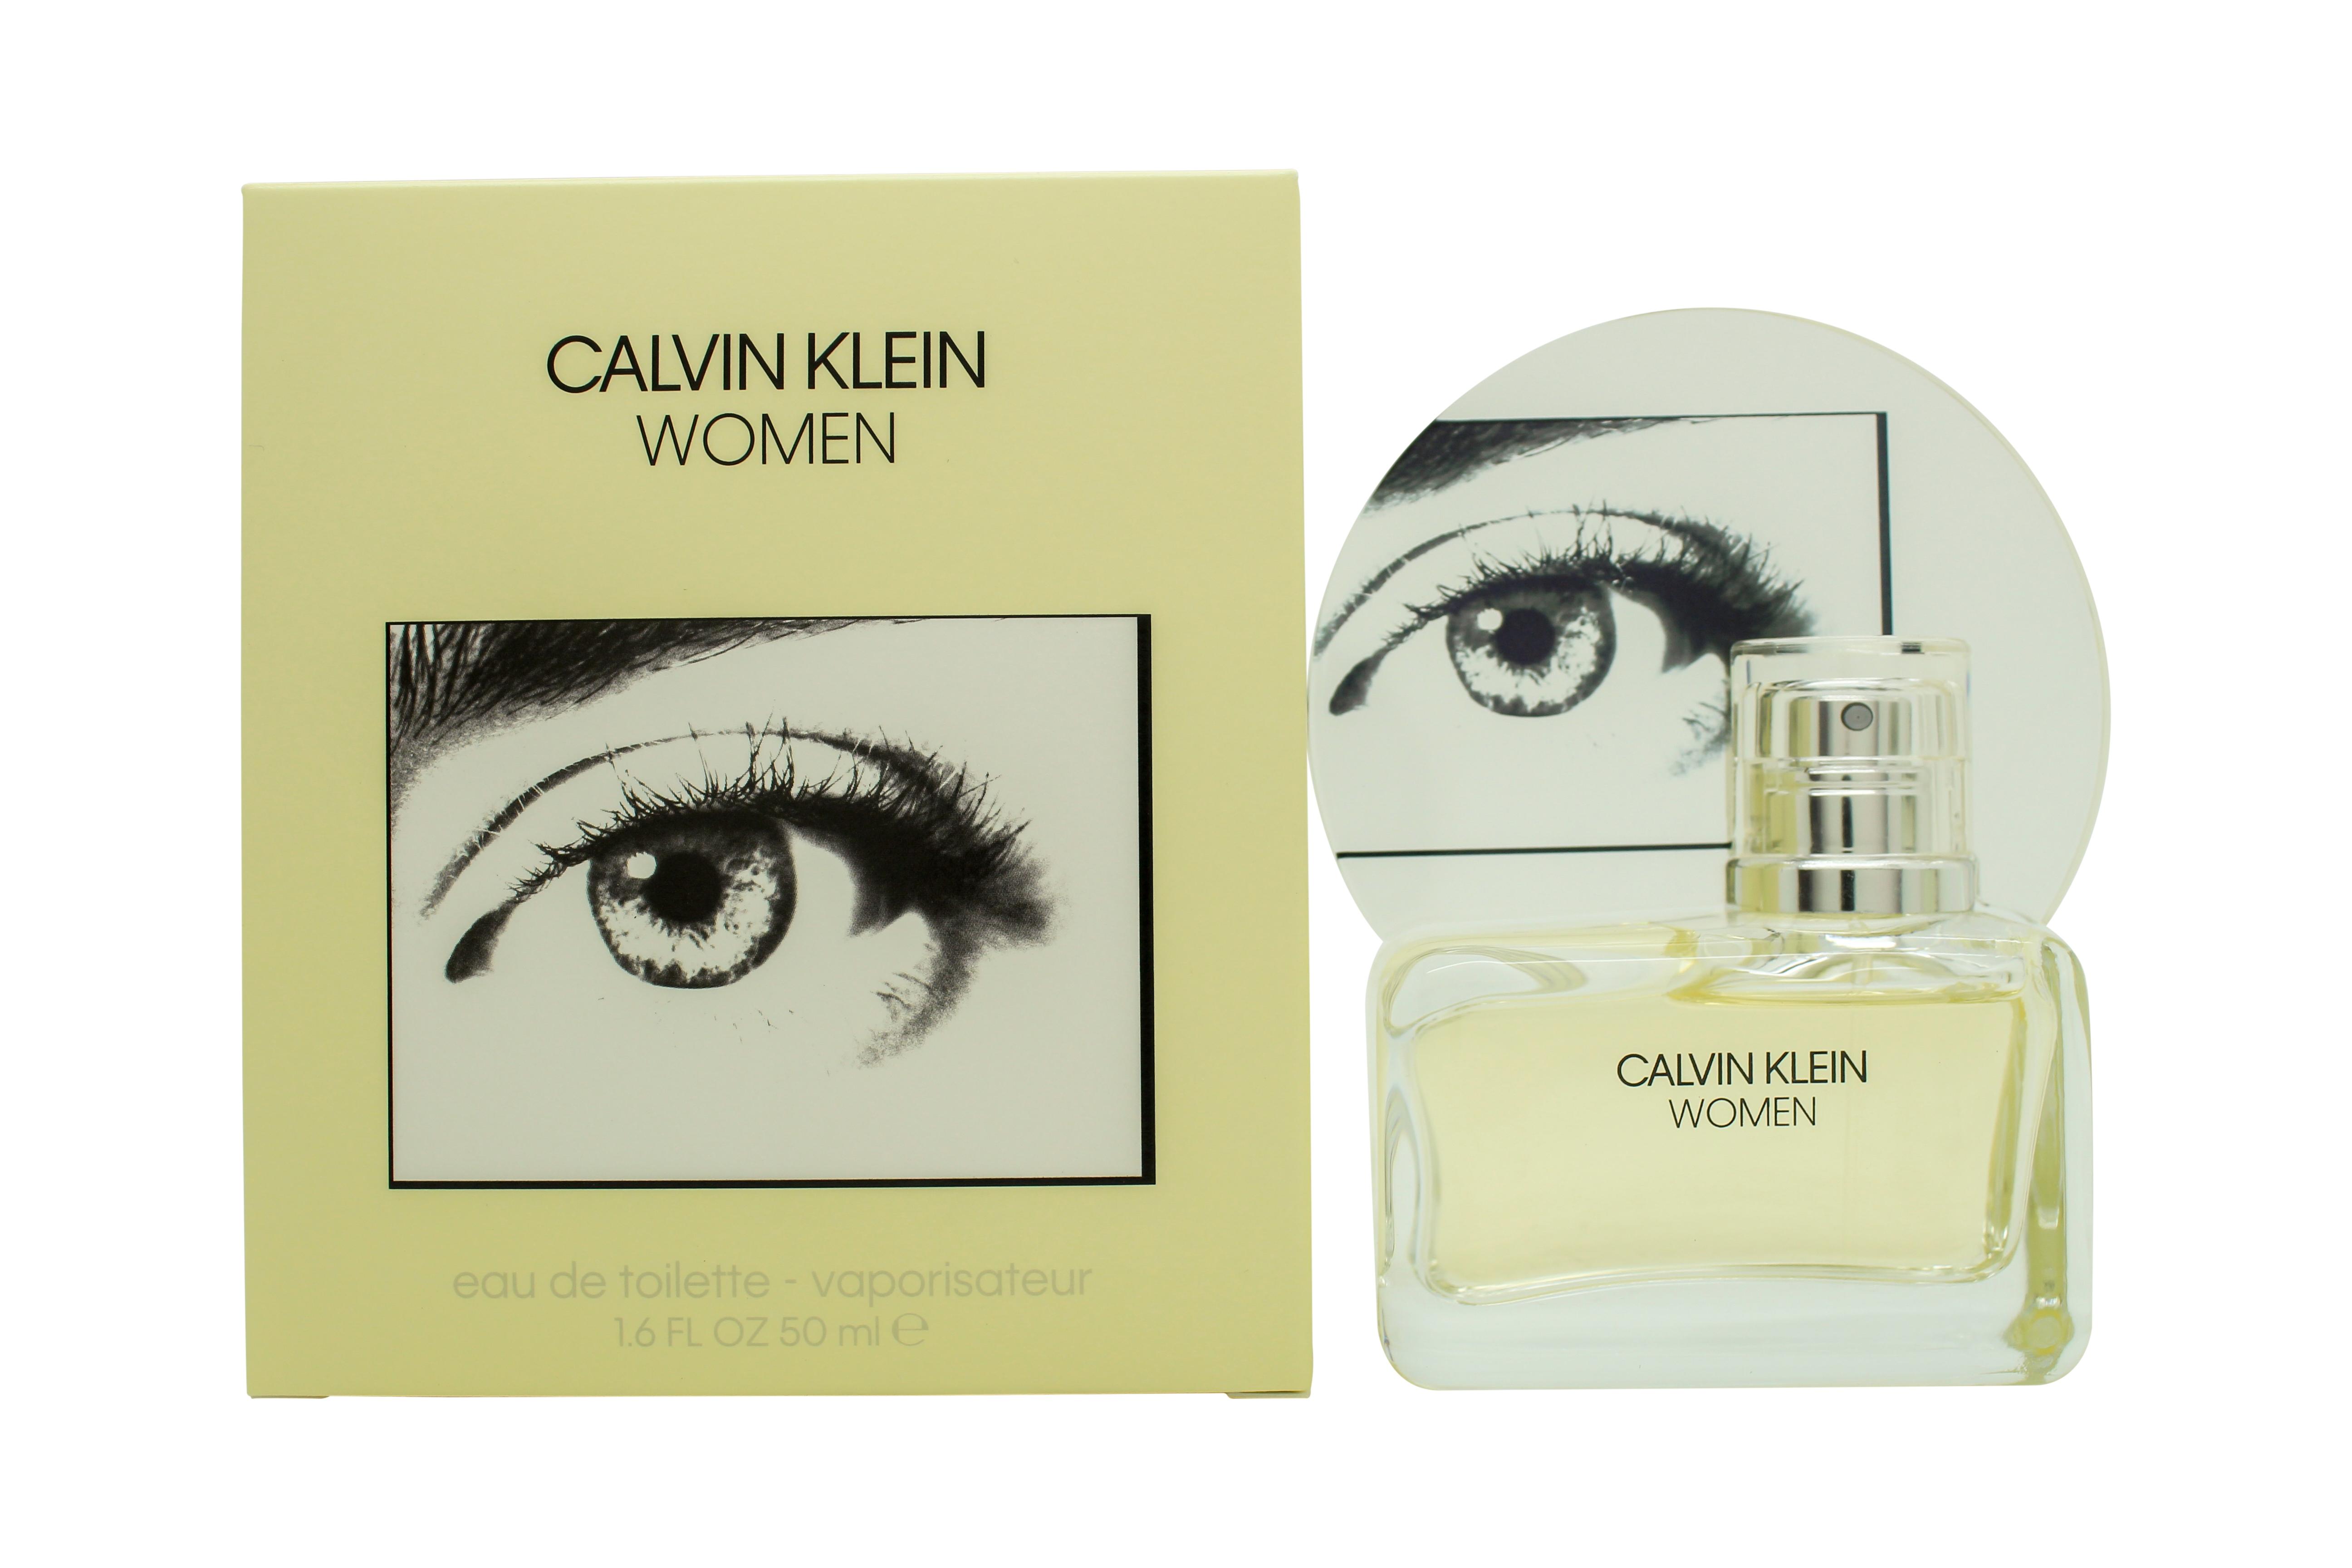 Calvin Klein Women Eau de Toilette 50ml Spray